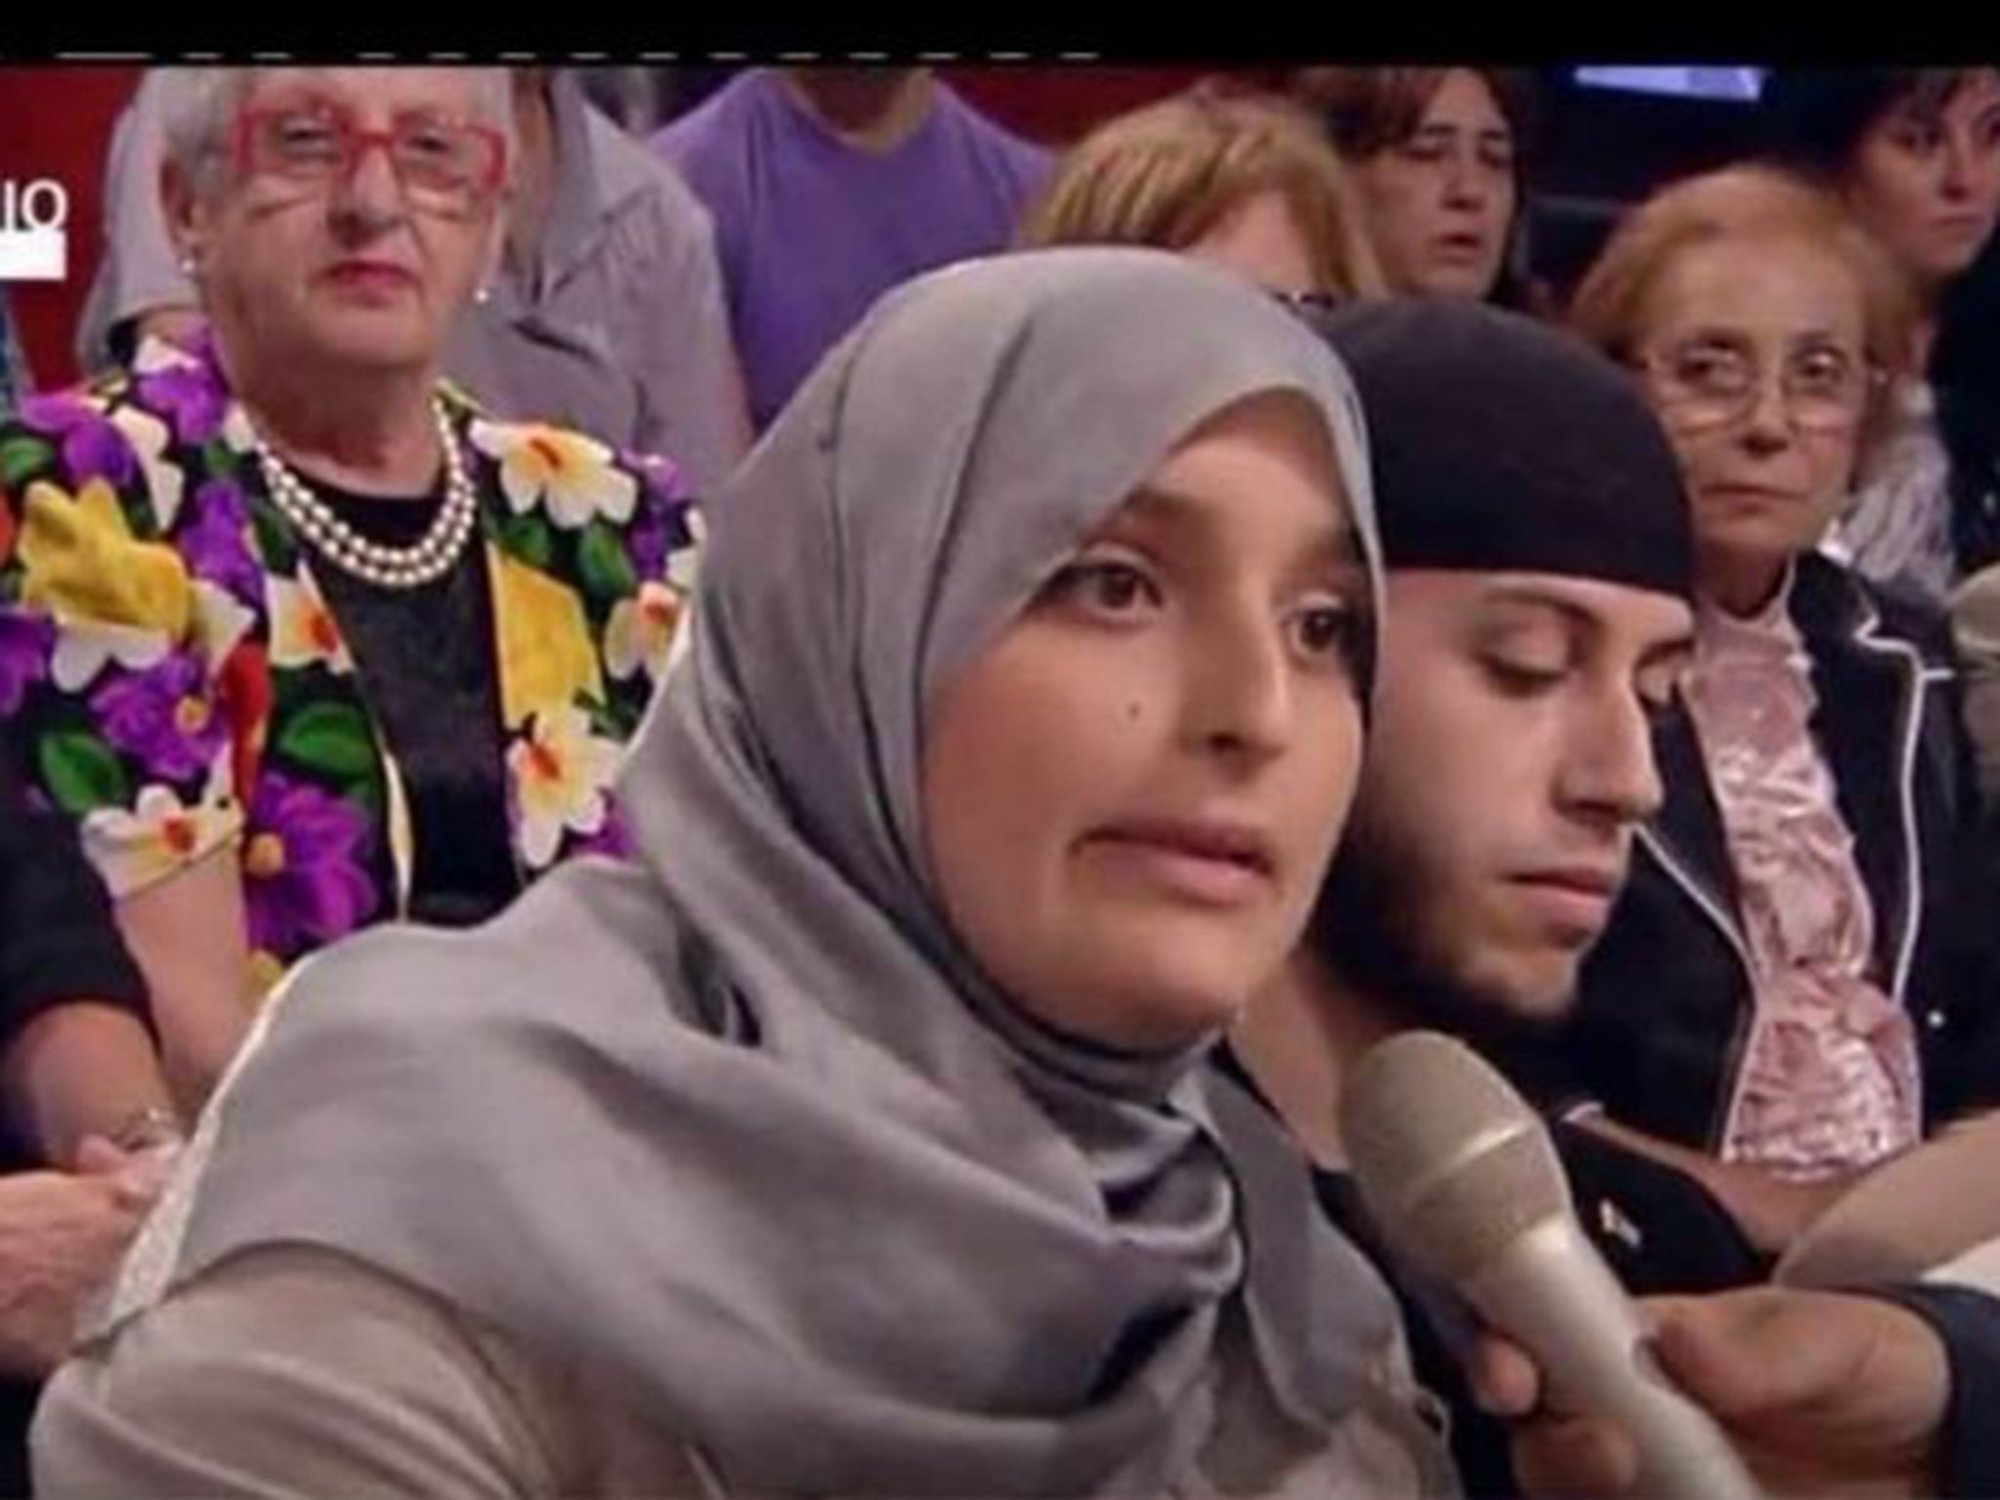 Maria Giulia Sergio, who changed her name to Fatima az Zahra, recruited women for ISIS